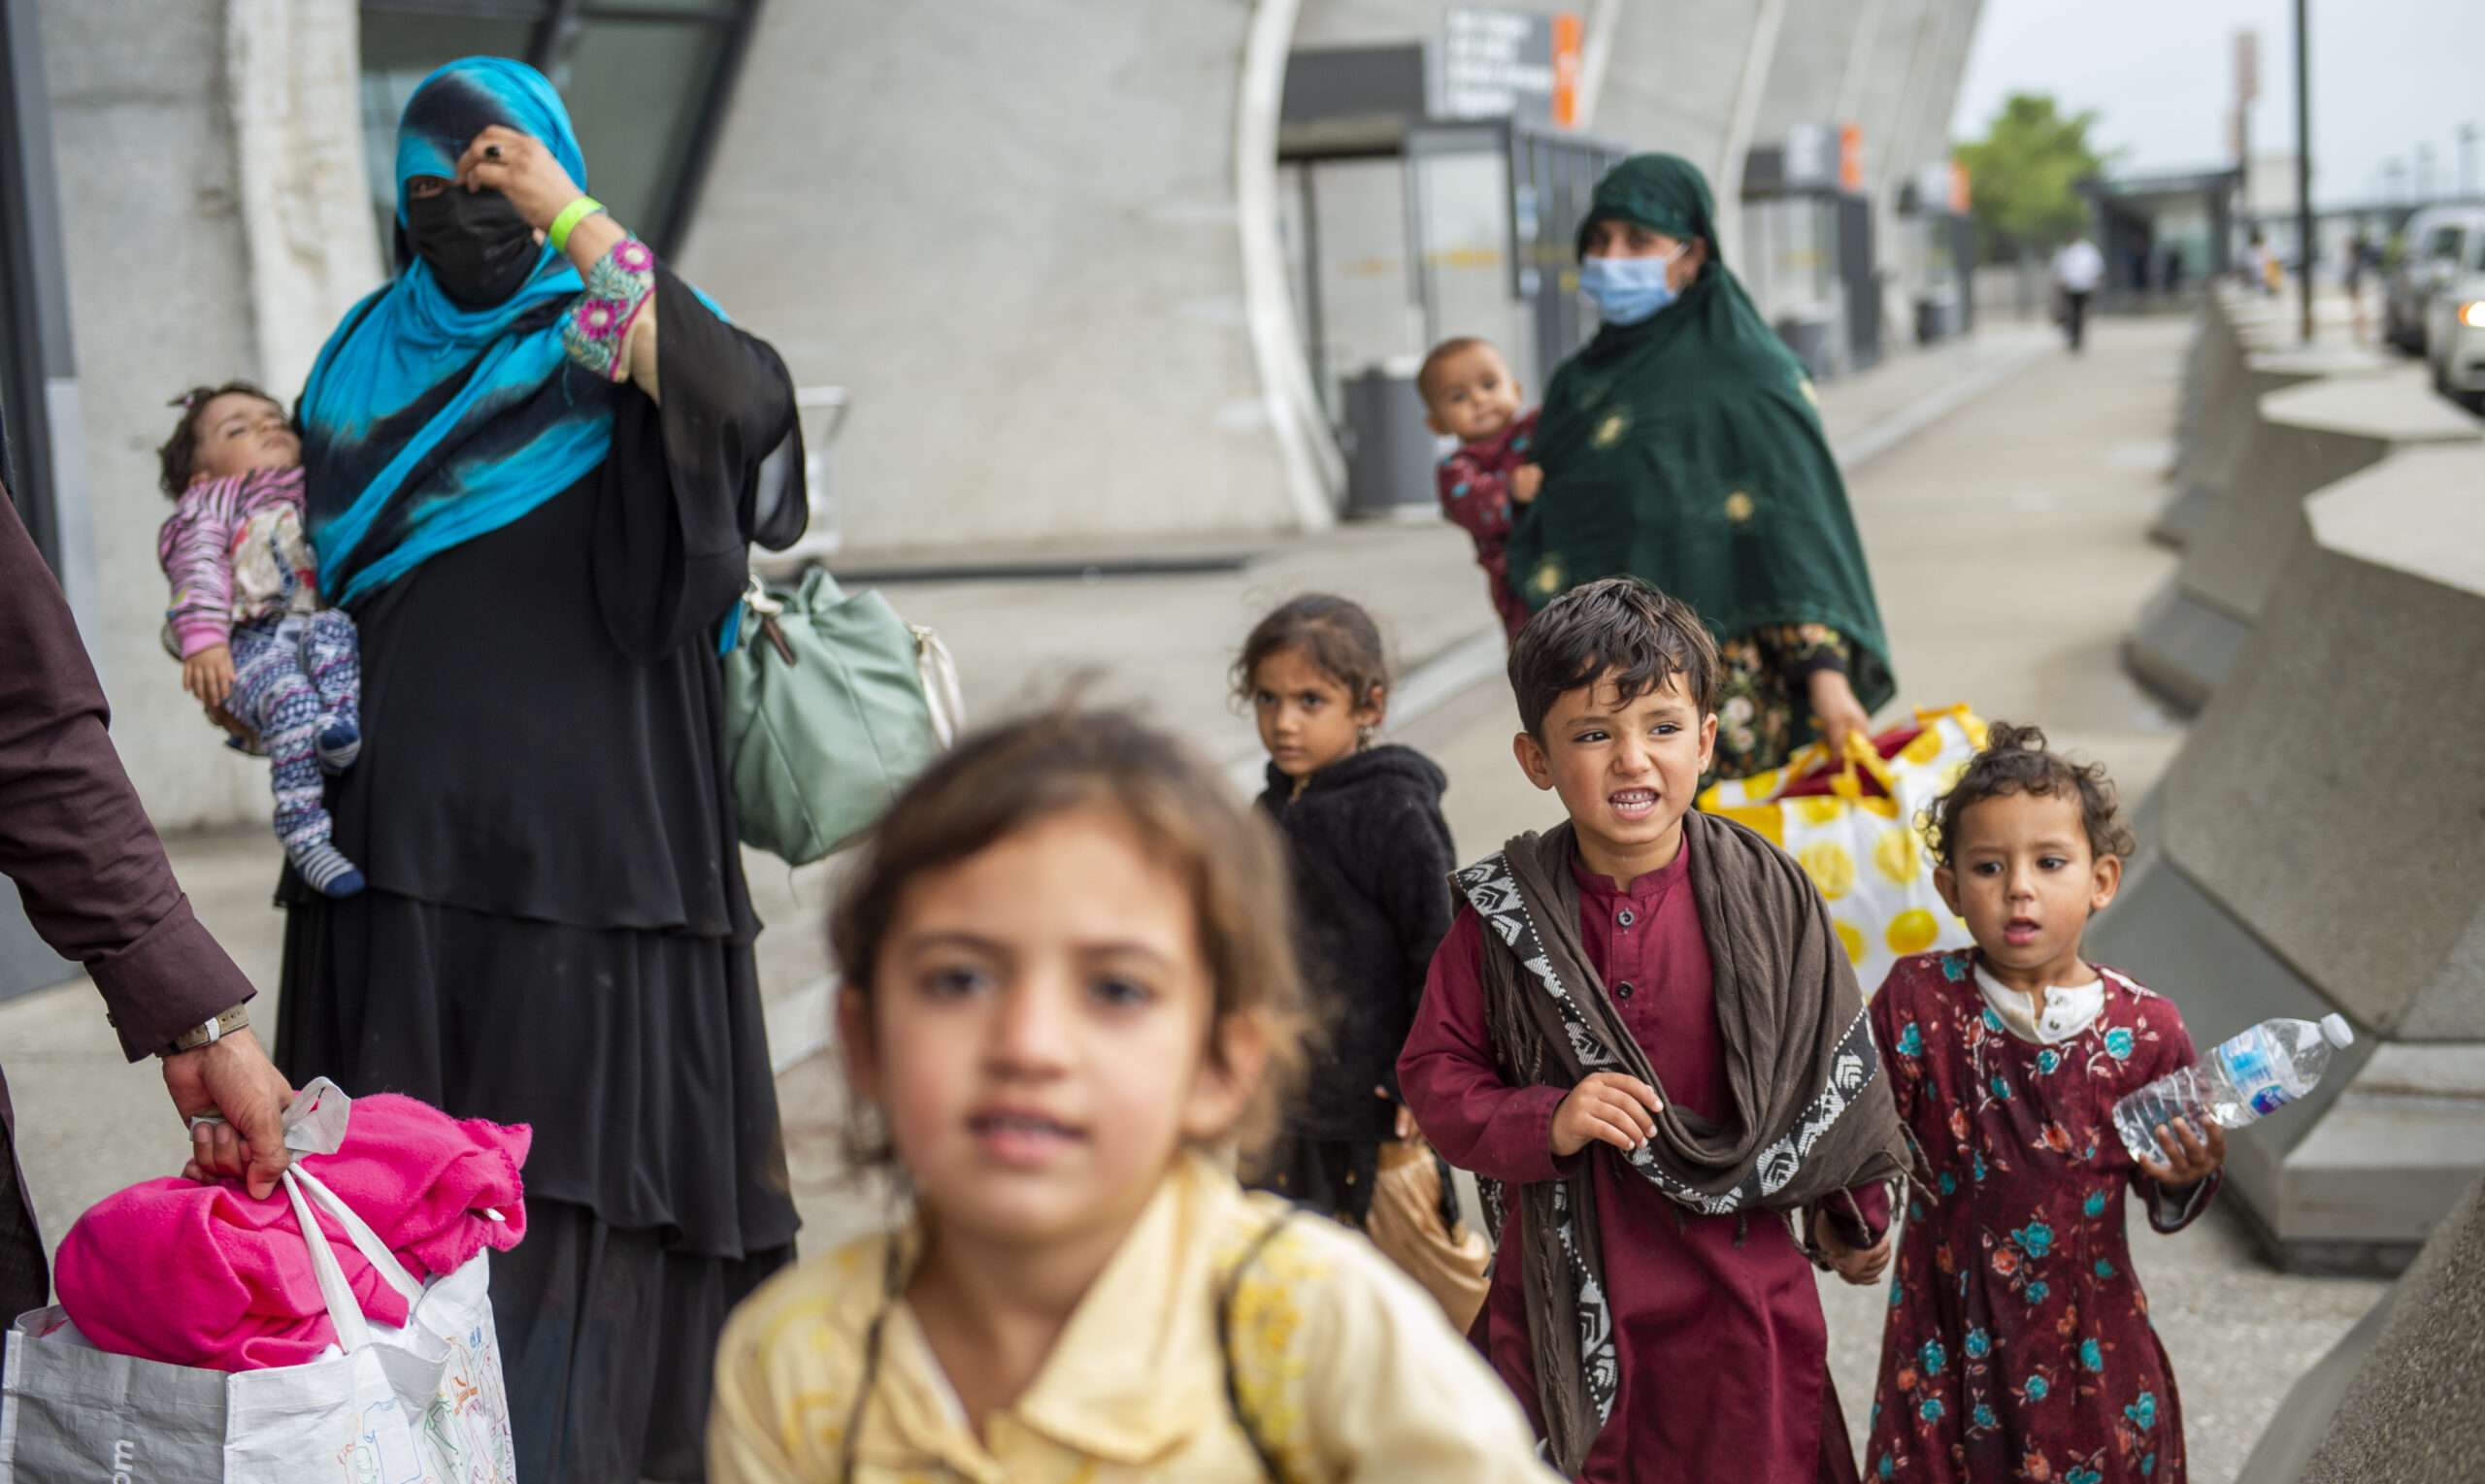 Lawmakers introduce bipartisan Afghan Adjustment Act to help Afghan evacuees stay in the U.S.